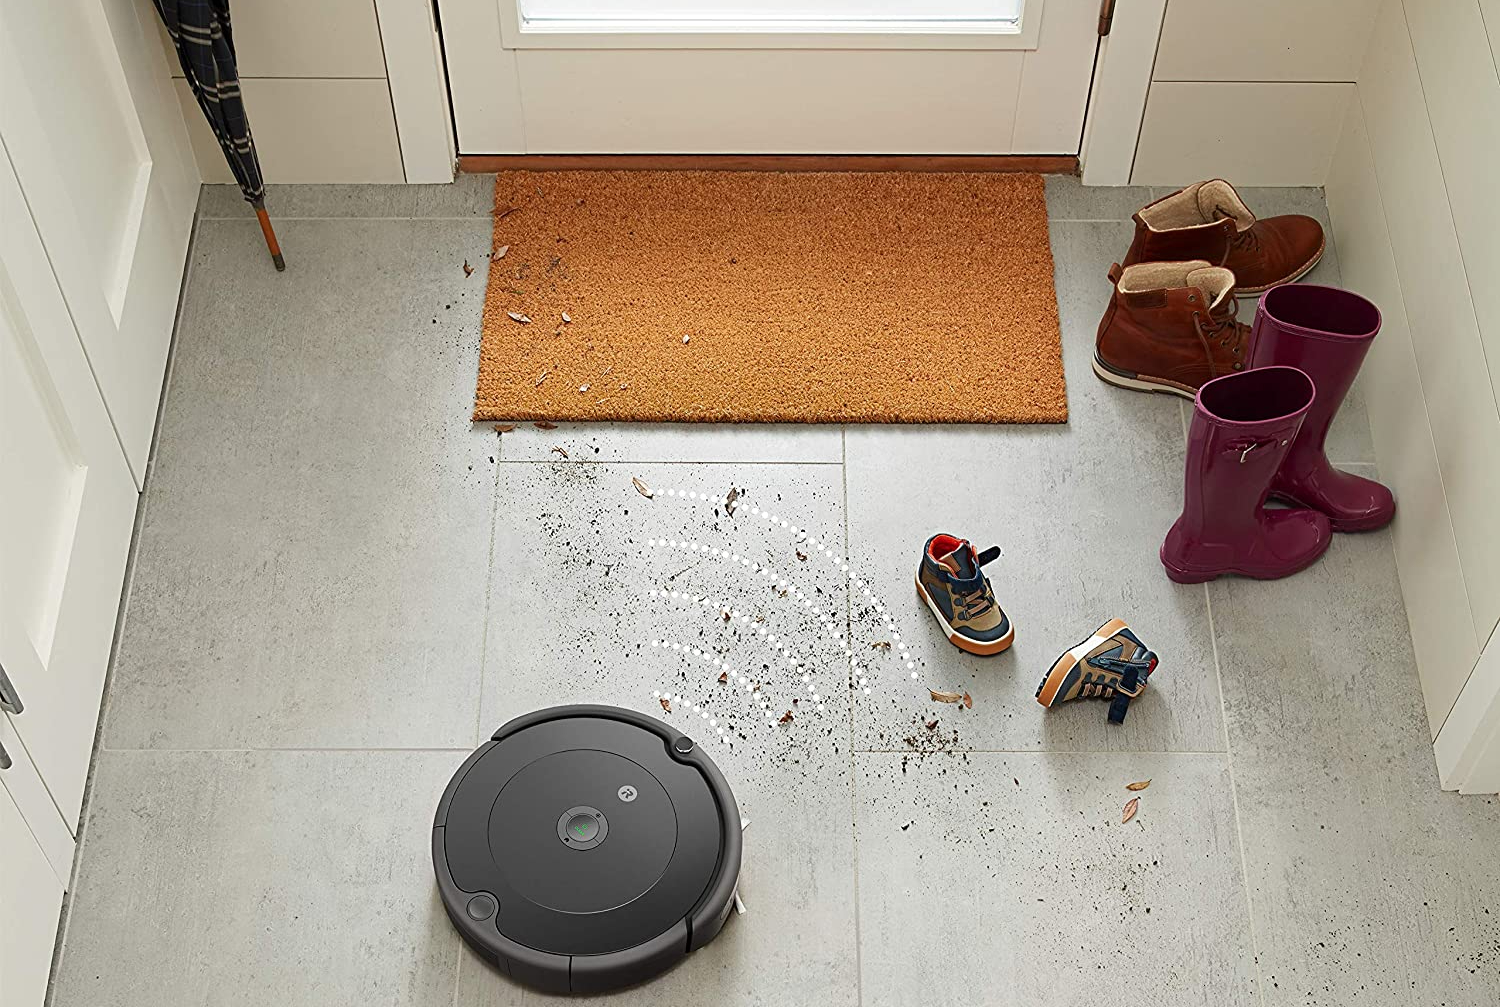 iRobot Roomba j7 Wi-Fi Connected Smart Robot Vacuum Avoids